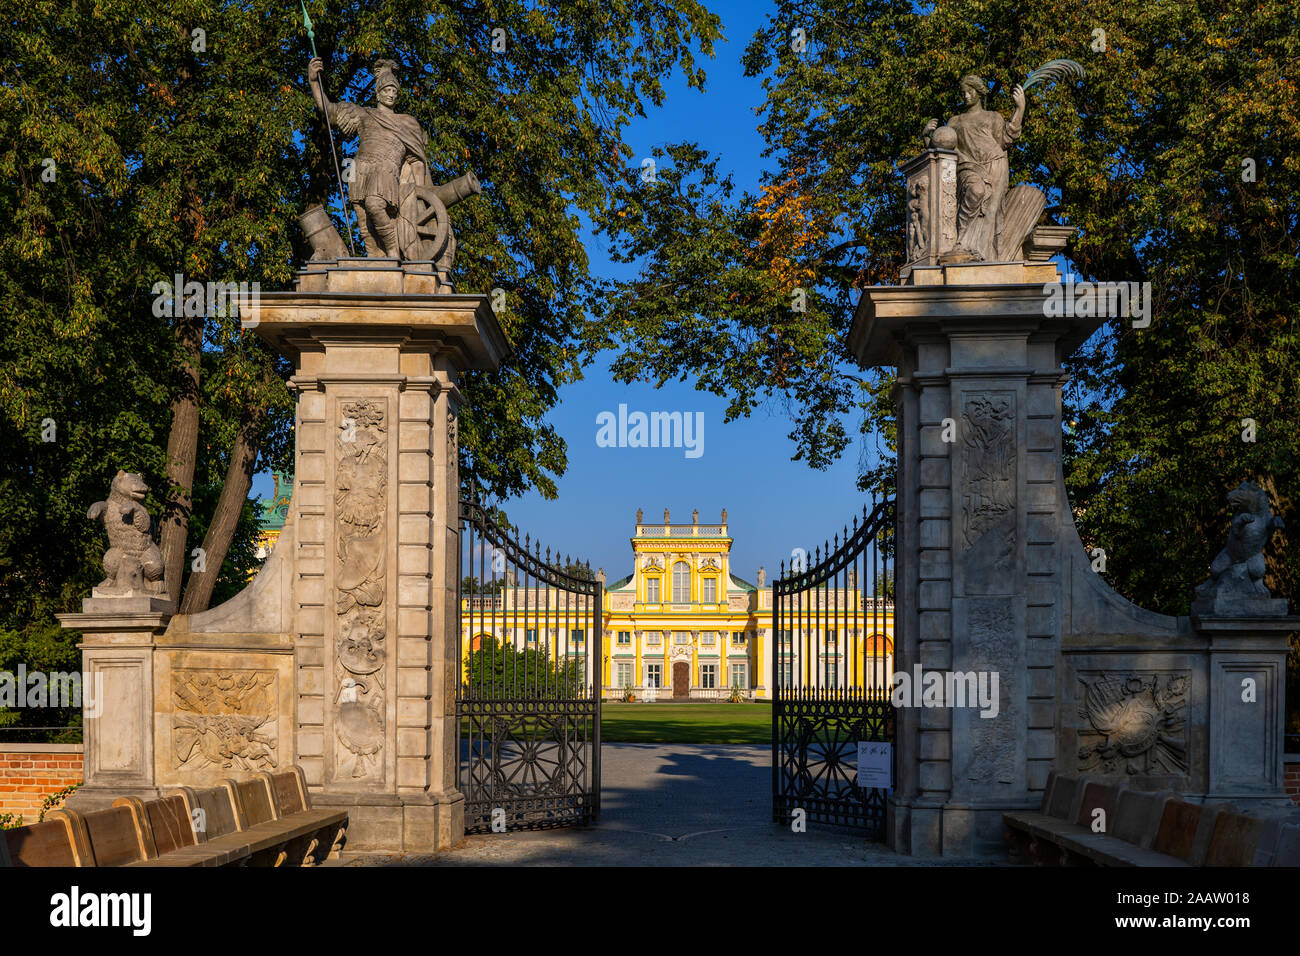 Main gate to the Wilanow Palace in Warsaw, Poland, Baroque royal residence of King John Sobieski III, 17th century city landmark. Stock Photo